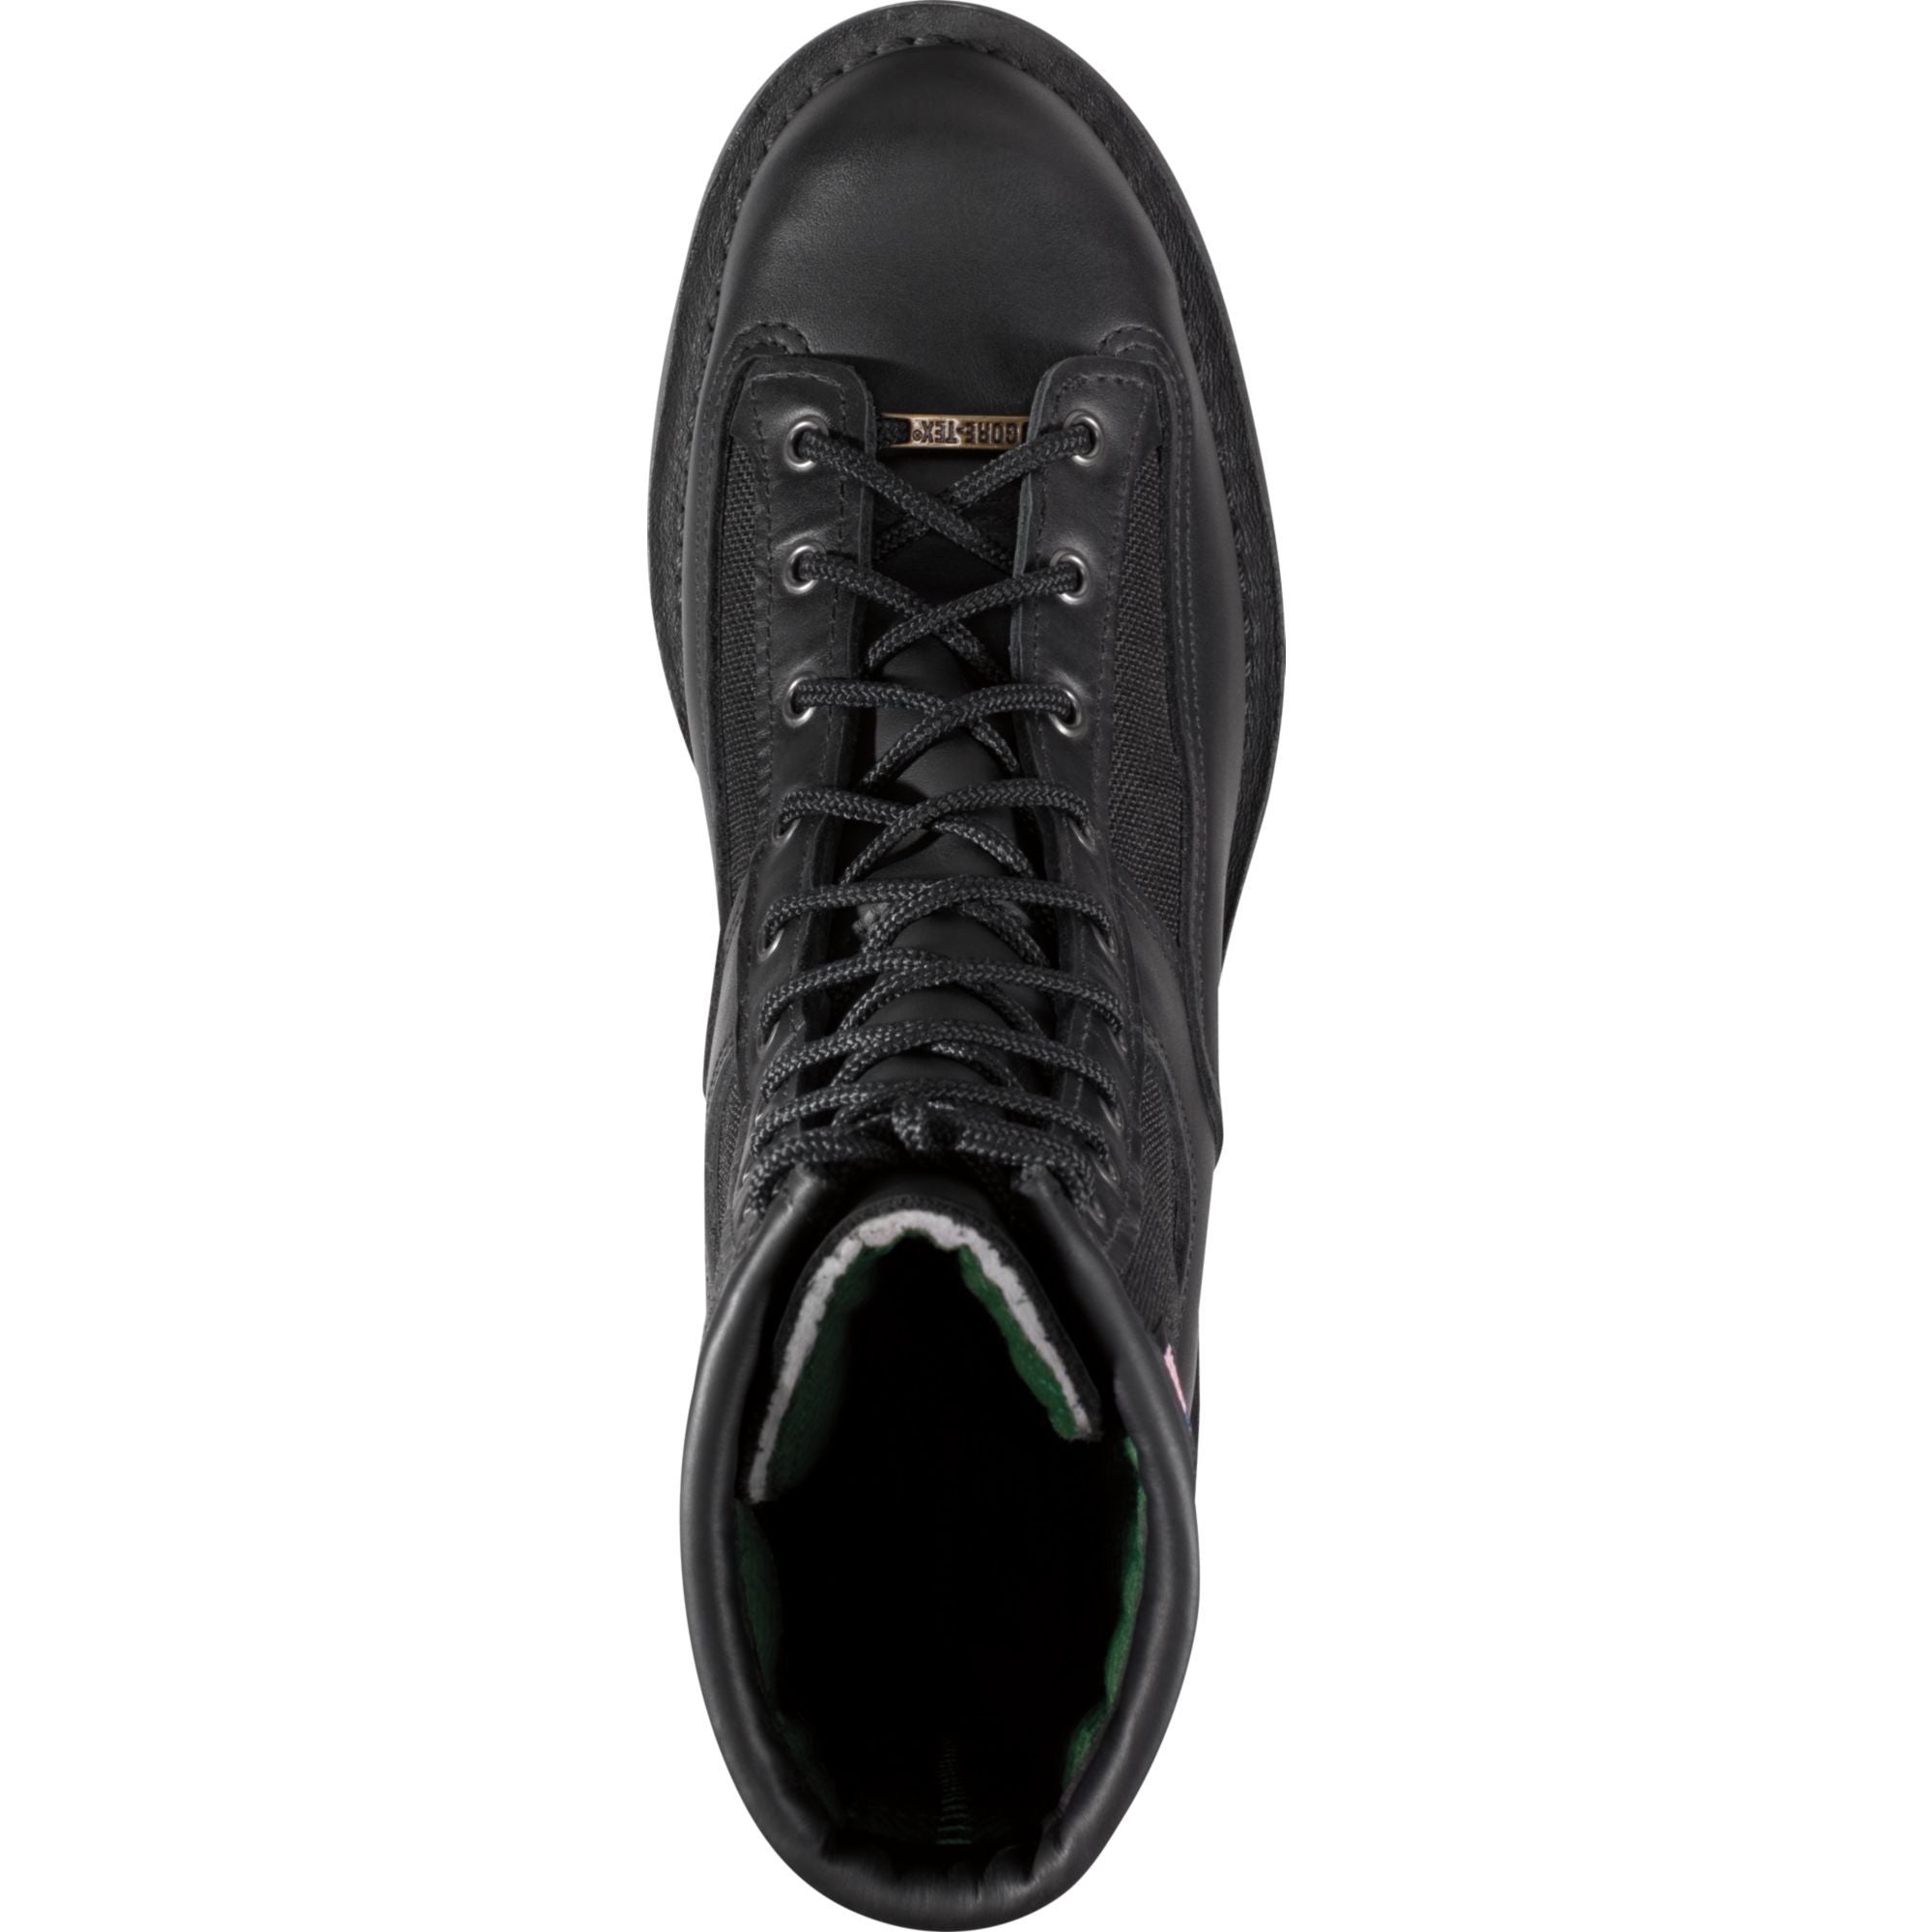 Danner Men's Acadia USA Made 8" Comp Toe WP Duty Boot - Black - 22500  - Overlook Boots